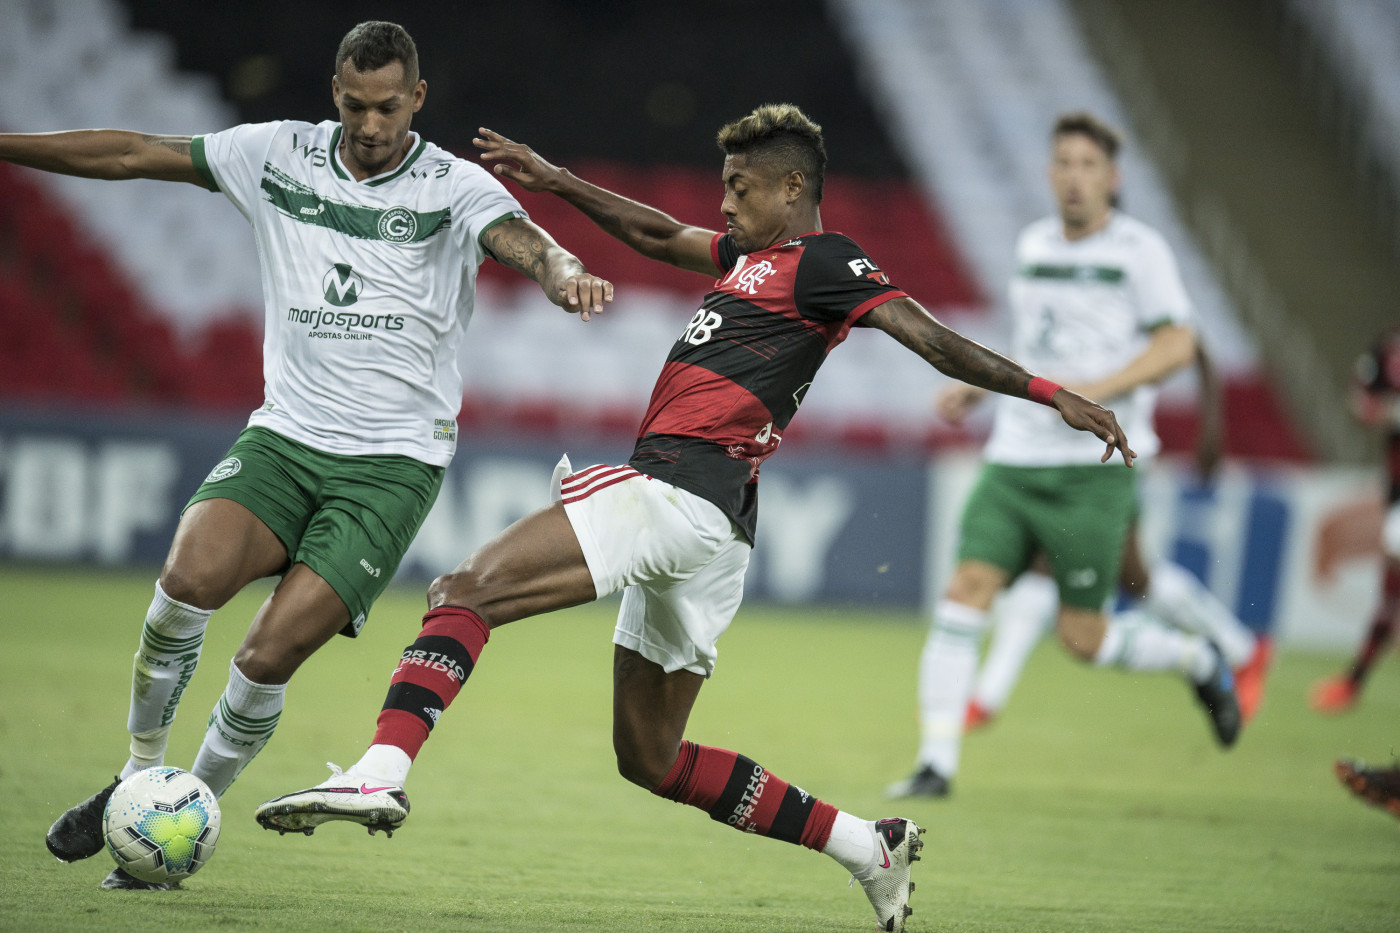 Jogadores do Flamengo e do Goiás disputando a bola